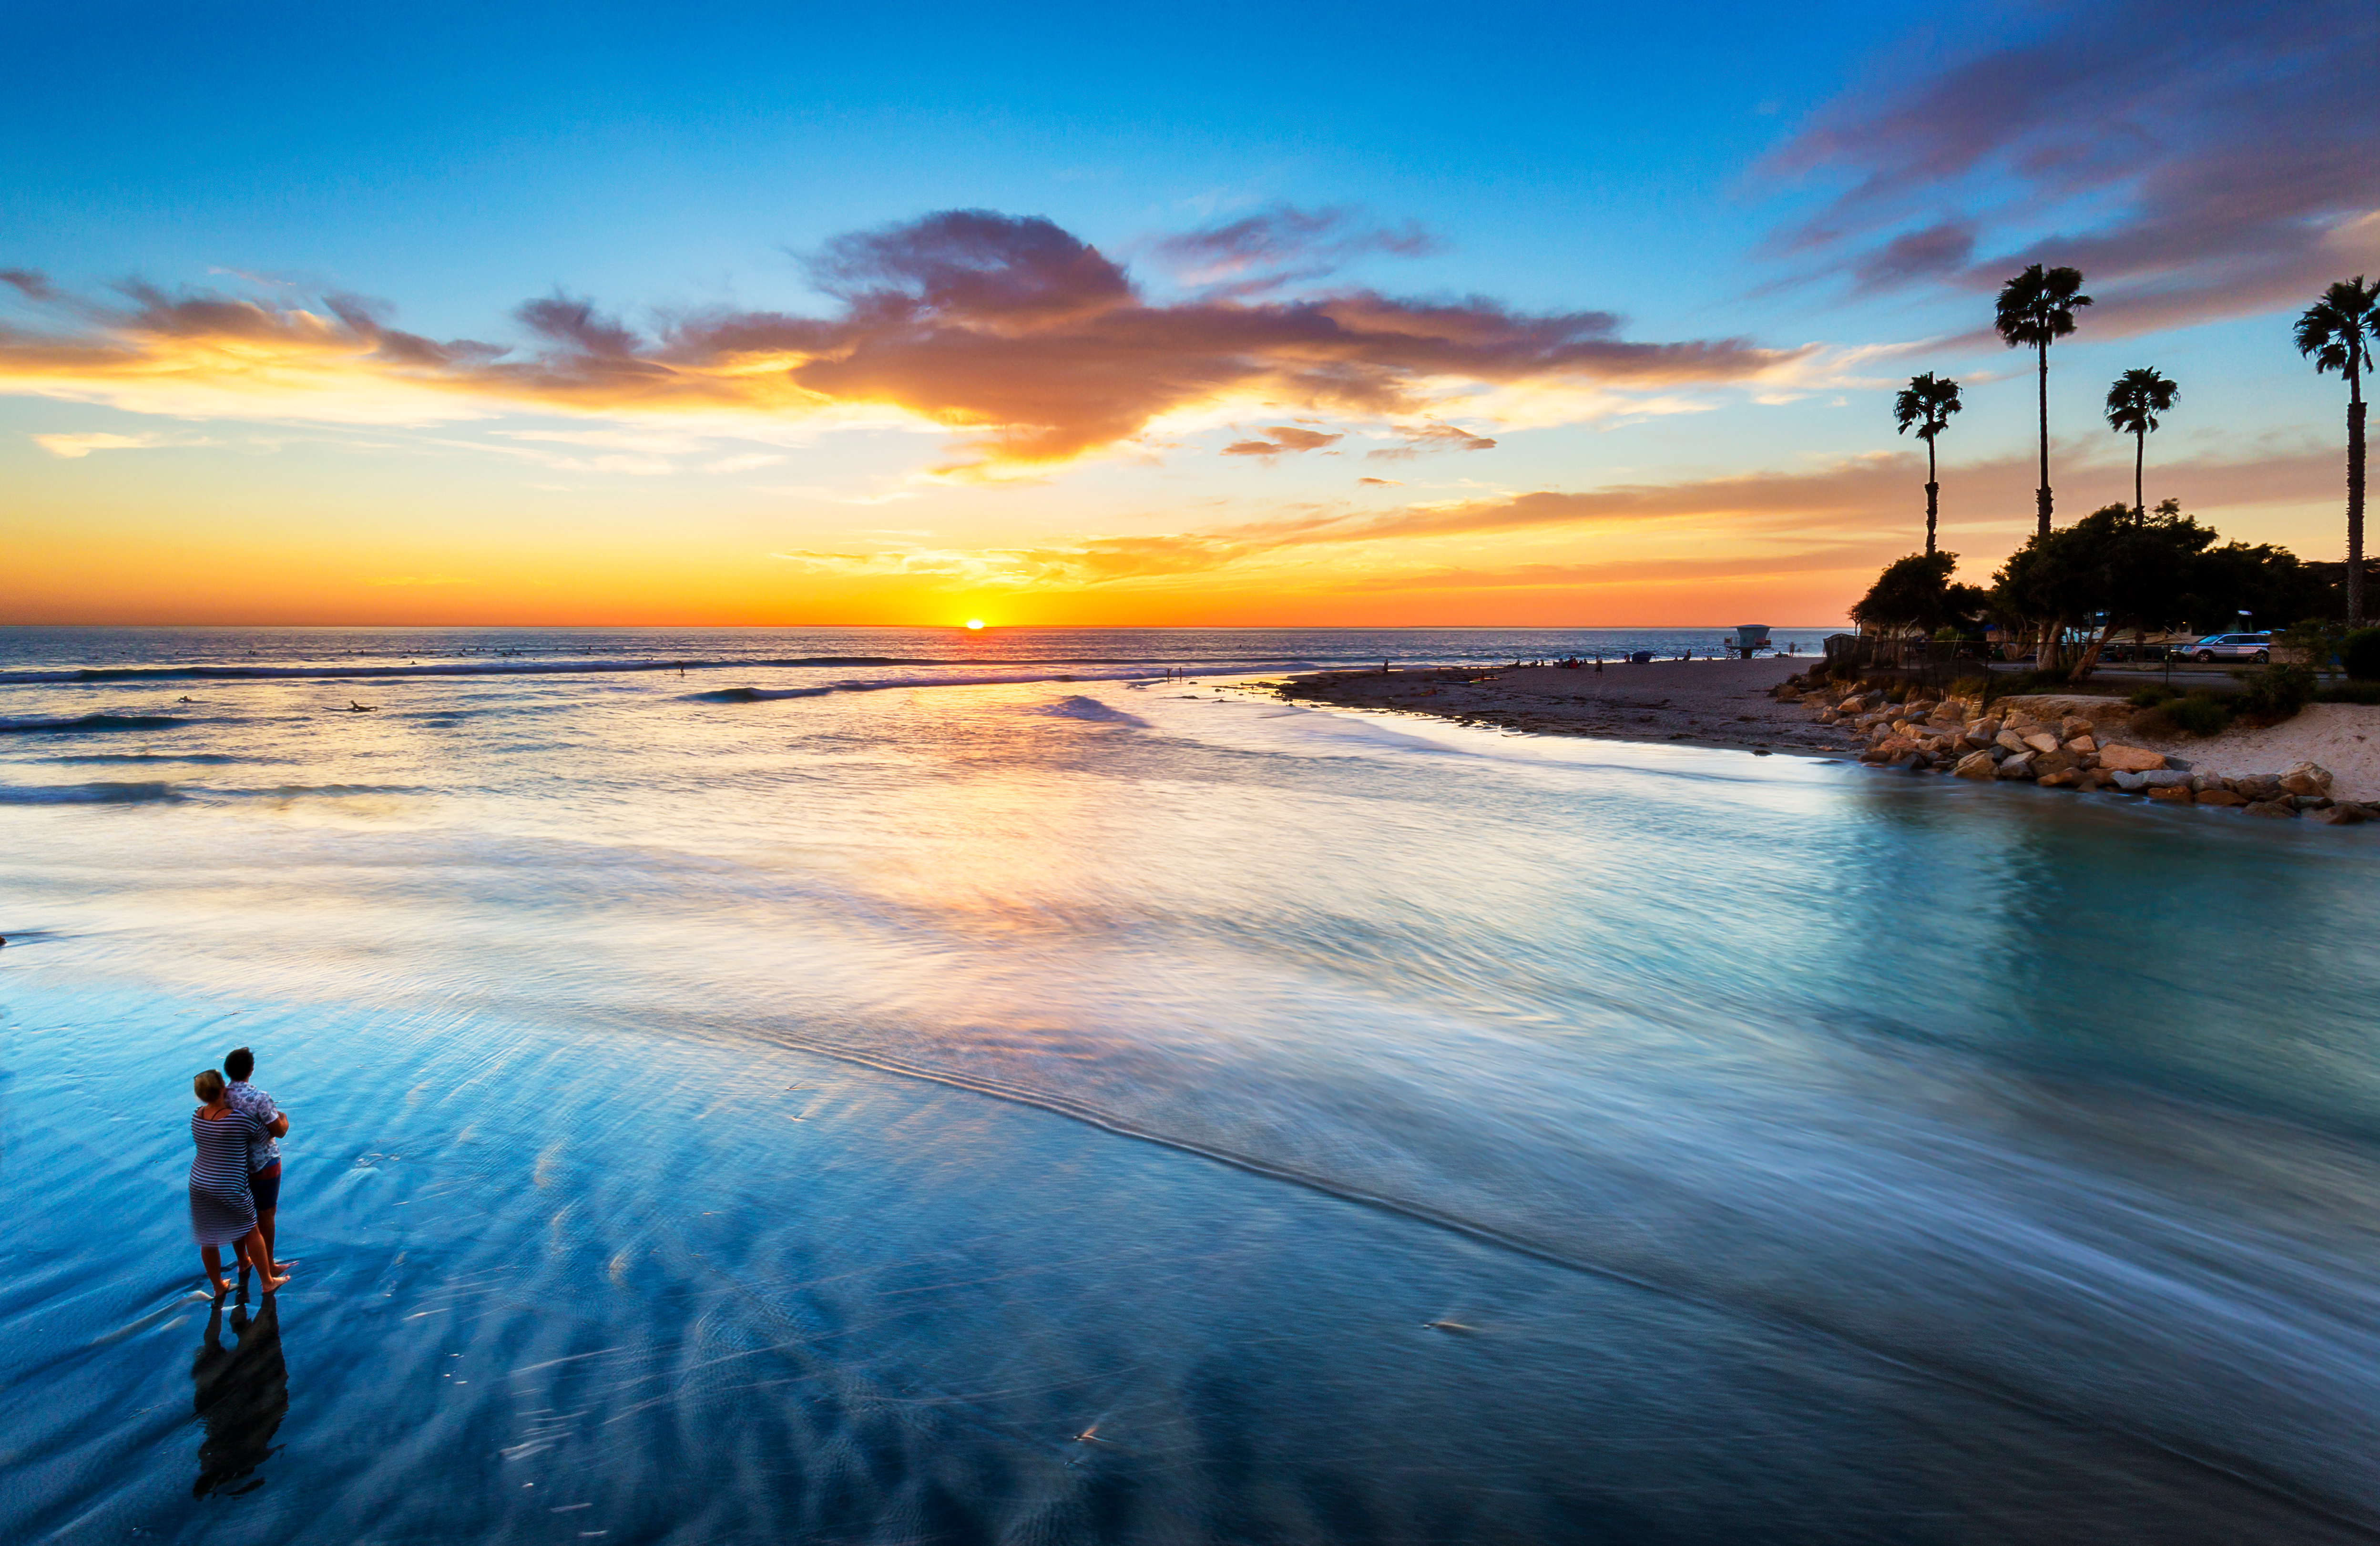 Free photo Couple enjoying a beautiful sunset on the seashore with palm trees